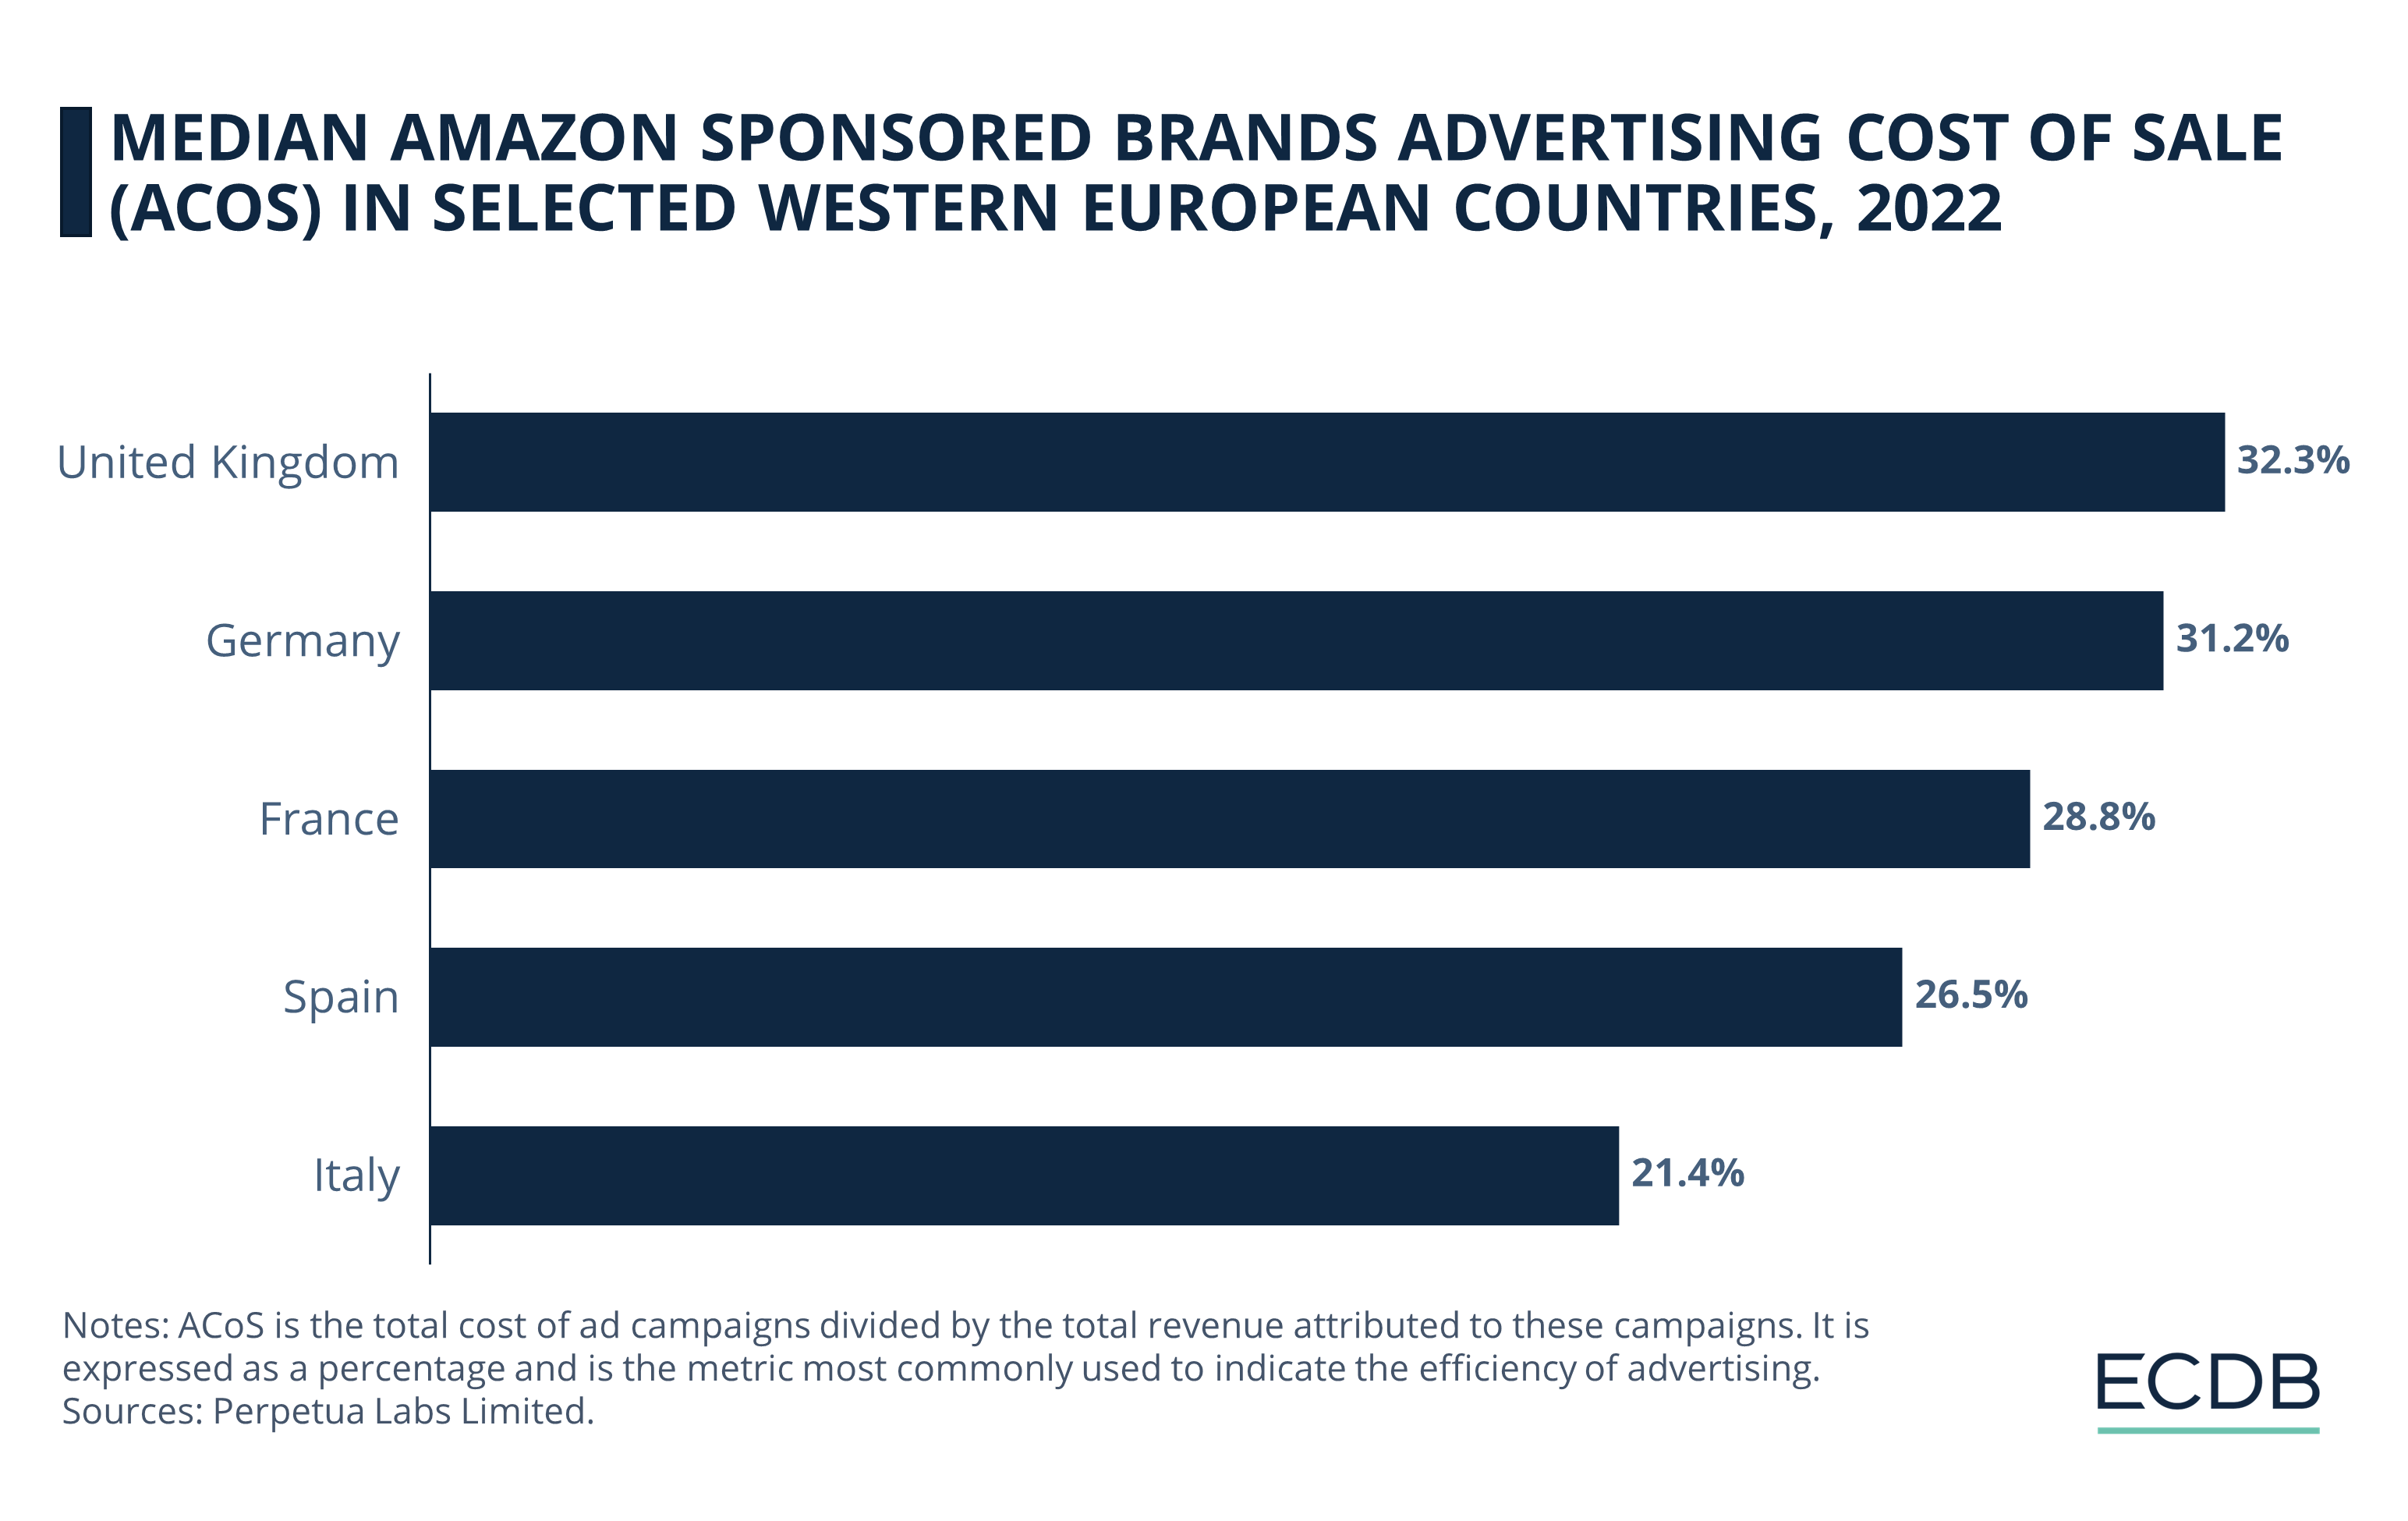 Amazon Median Sponsored Brands ACoS in Selected Western European Countries, 2022